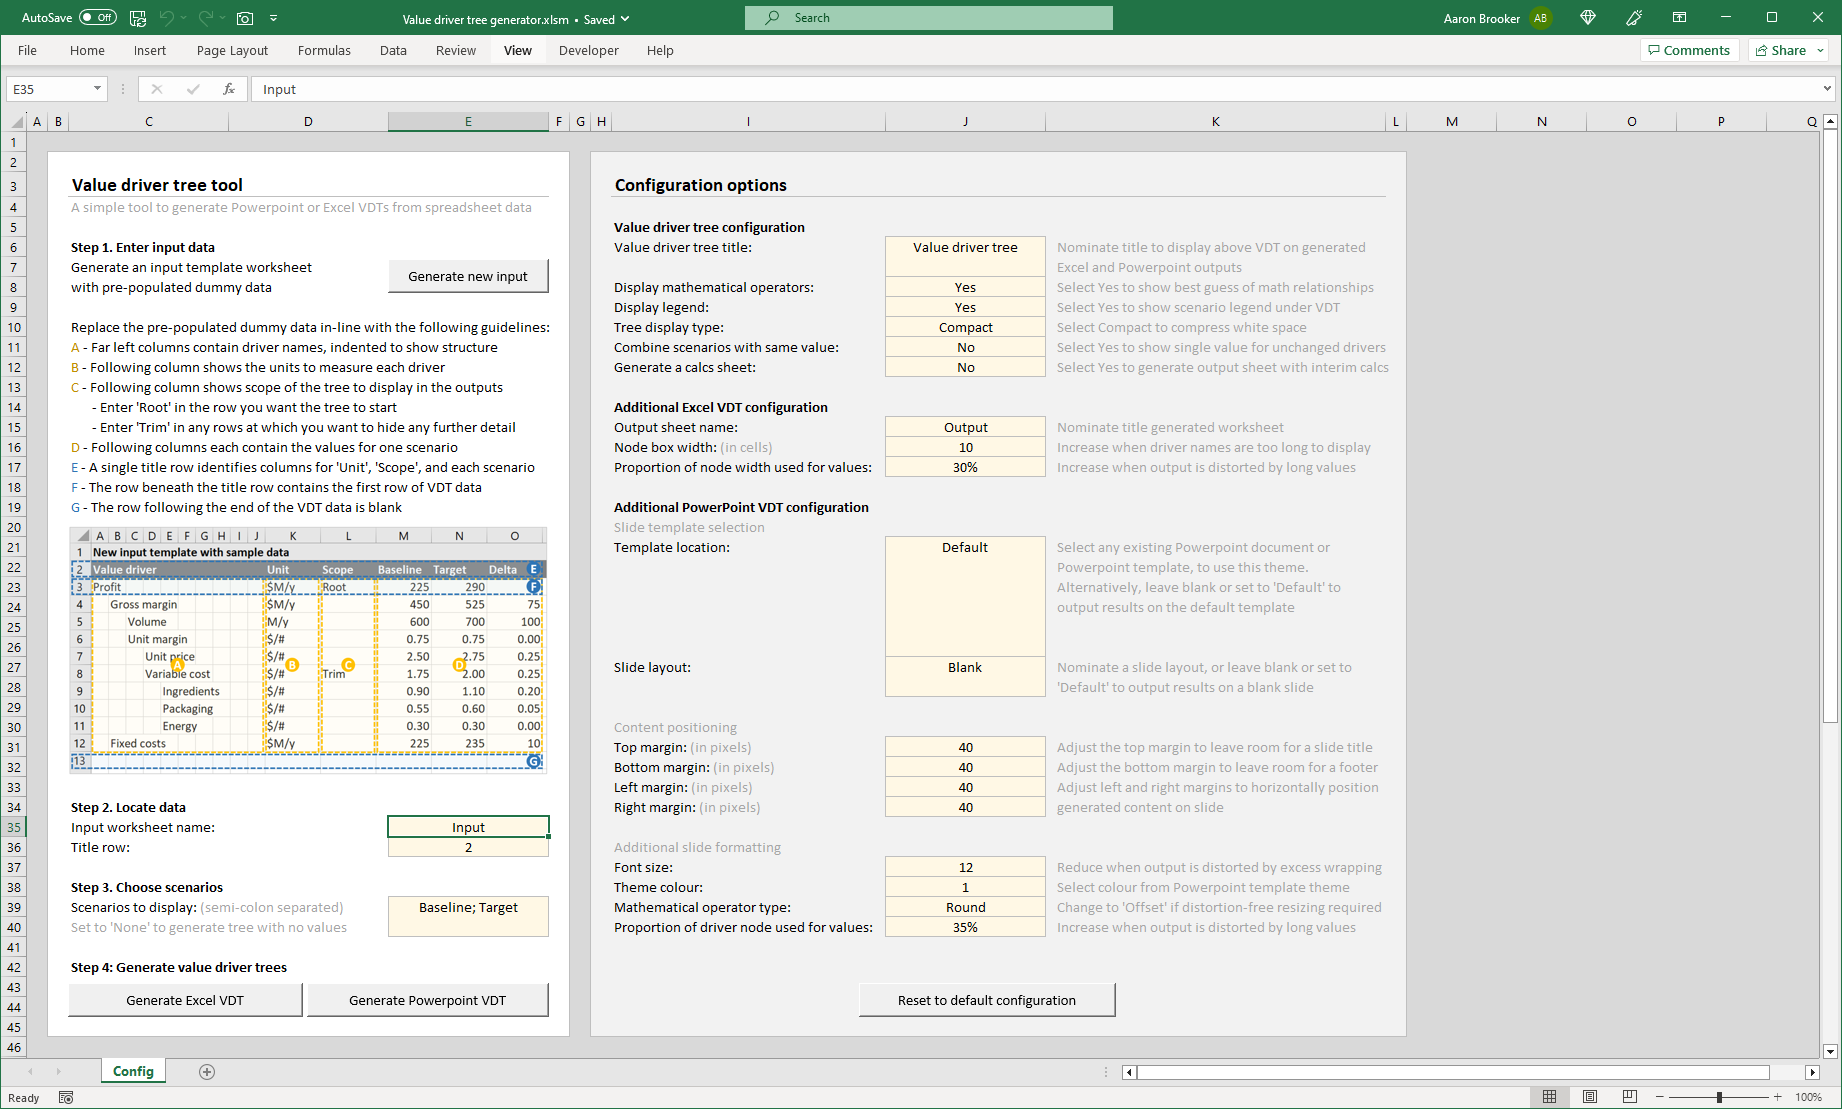 Screenshot of the value driver tree generation spreadsheet